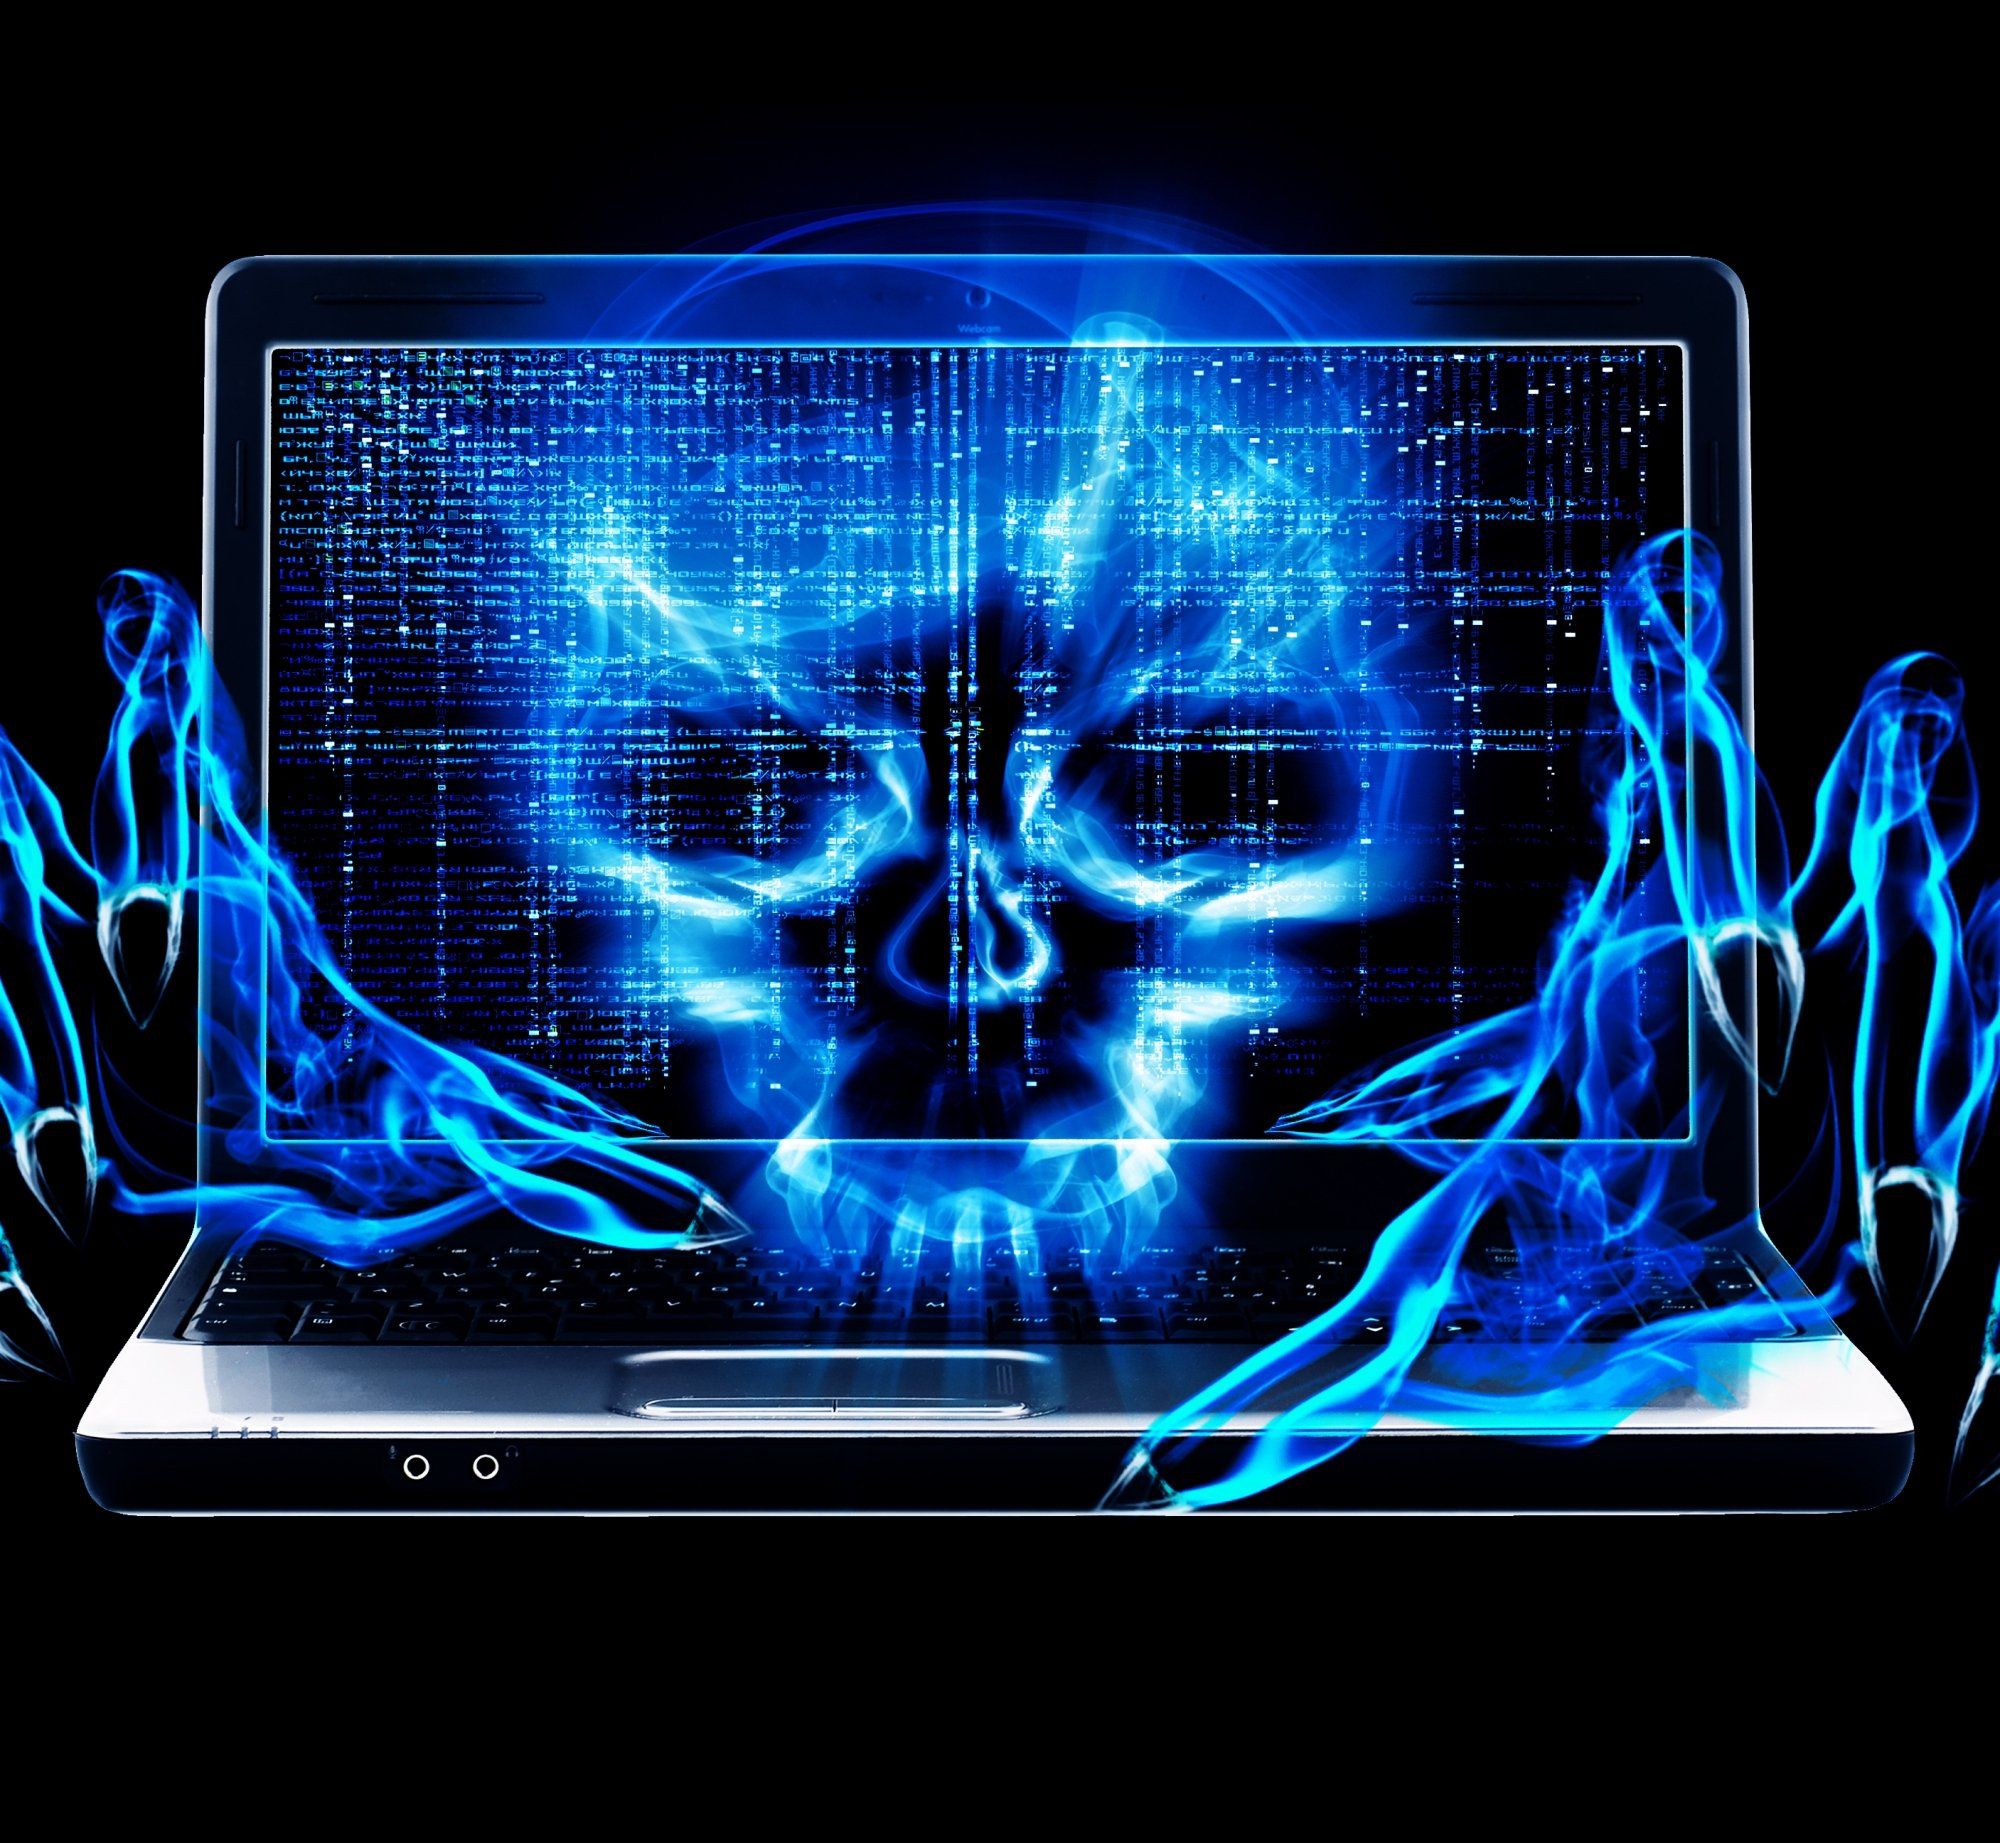 Hack hacking hacker virus anarchy dark computer internet anonymous sadic code wallpaperx1843